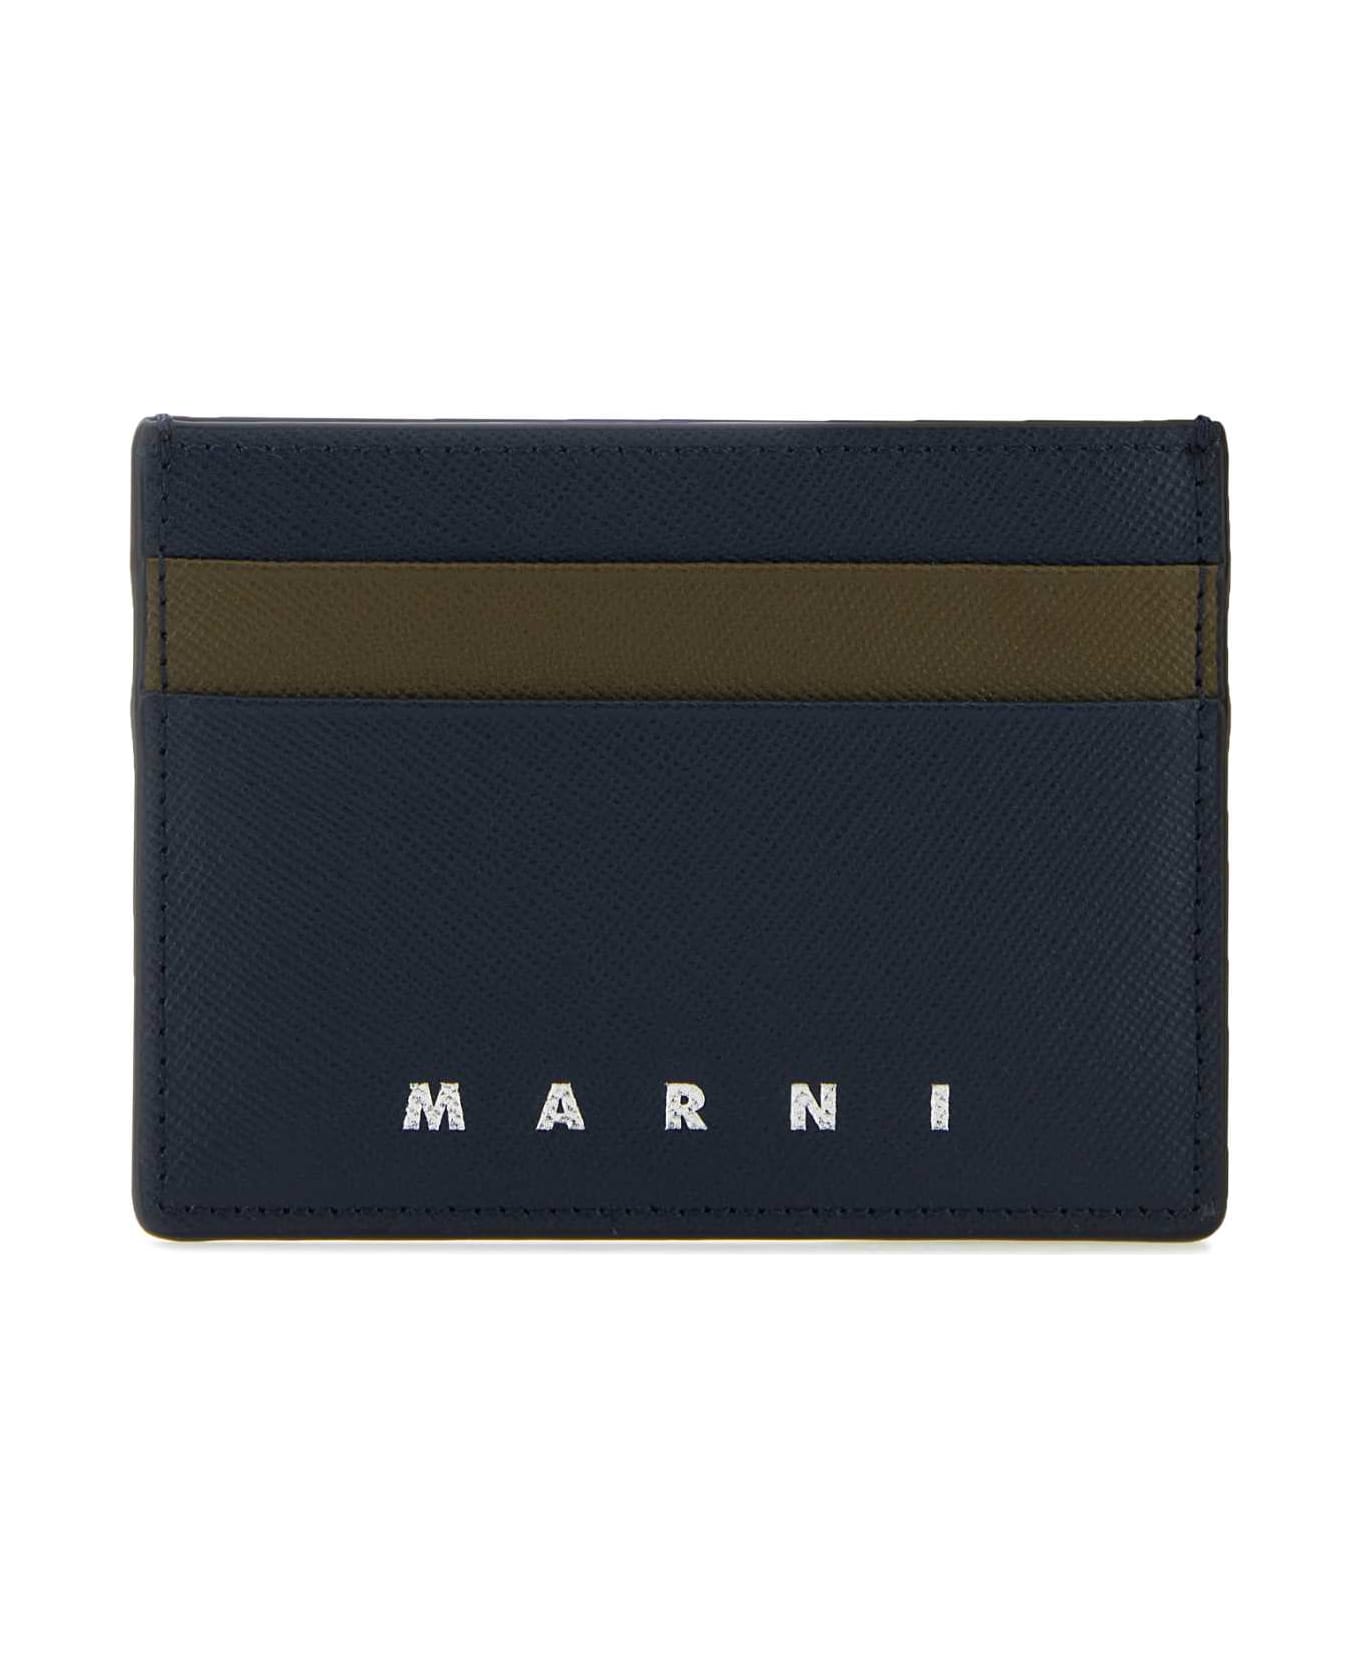 Marni Two-tone Leather Cardholder - NIGHTBLUEDUSTYOLIVE